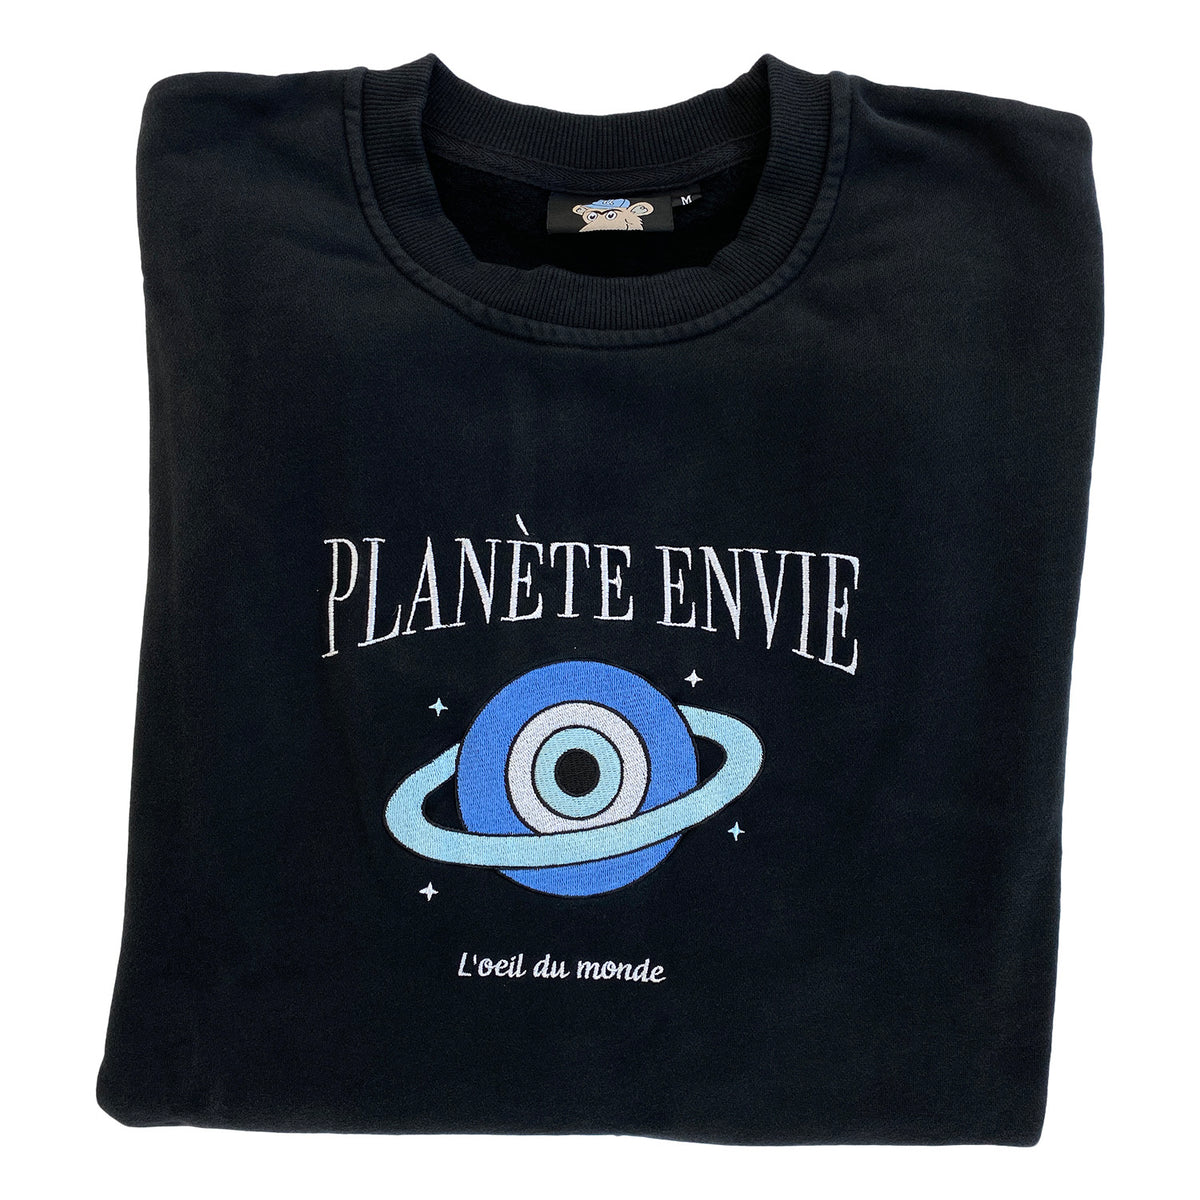 🚨ONLY ONE🚨 Evil Eye Planet Envié Crewneck Sweatshirt - LARGE / NAVY BLUE